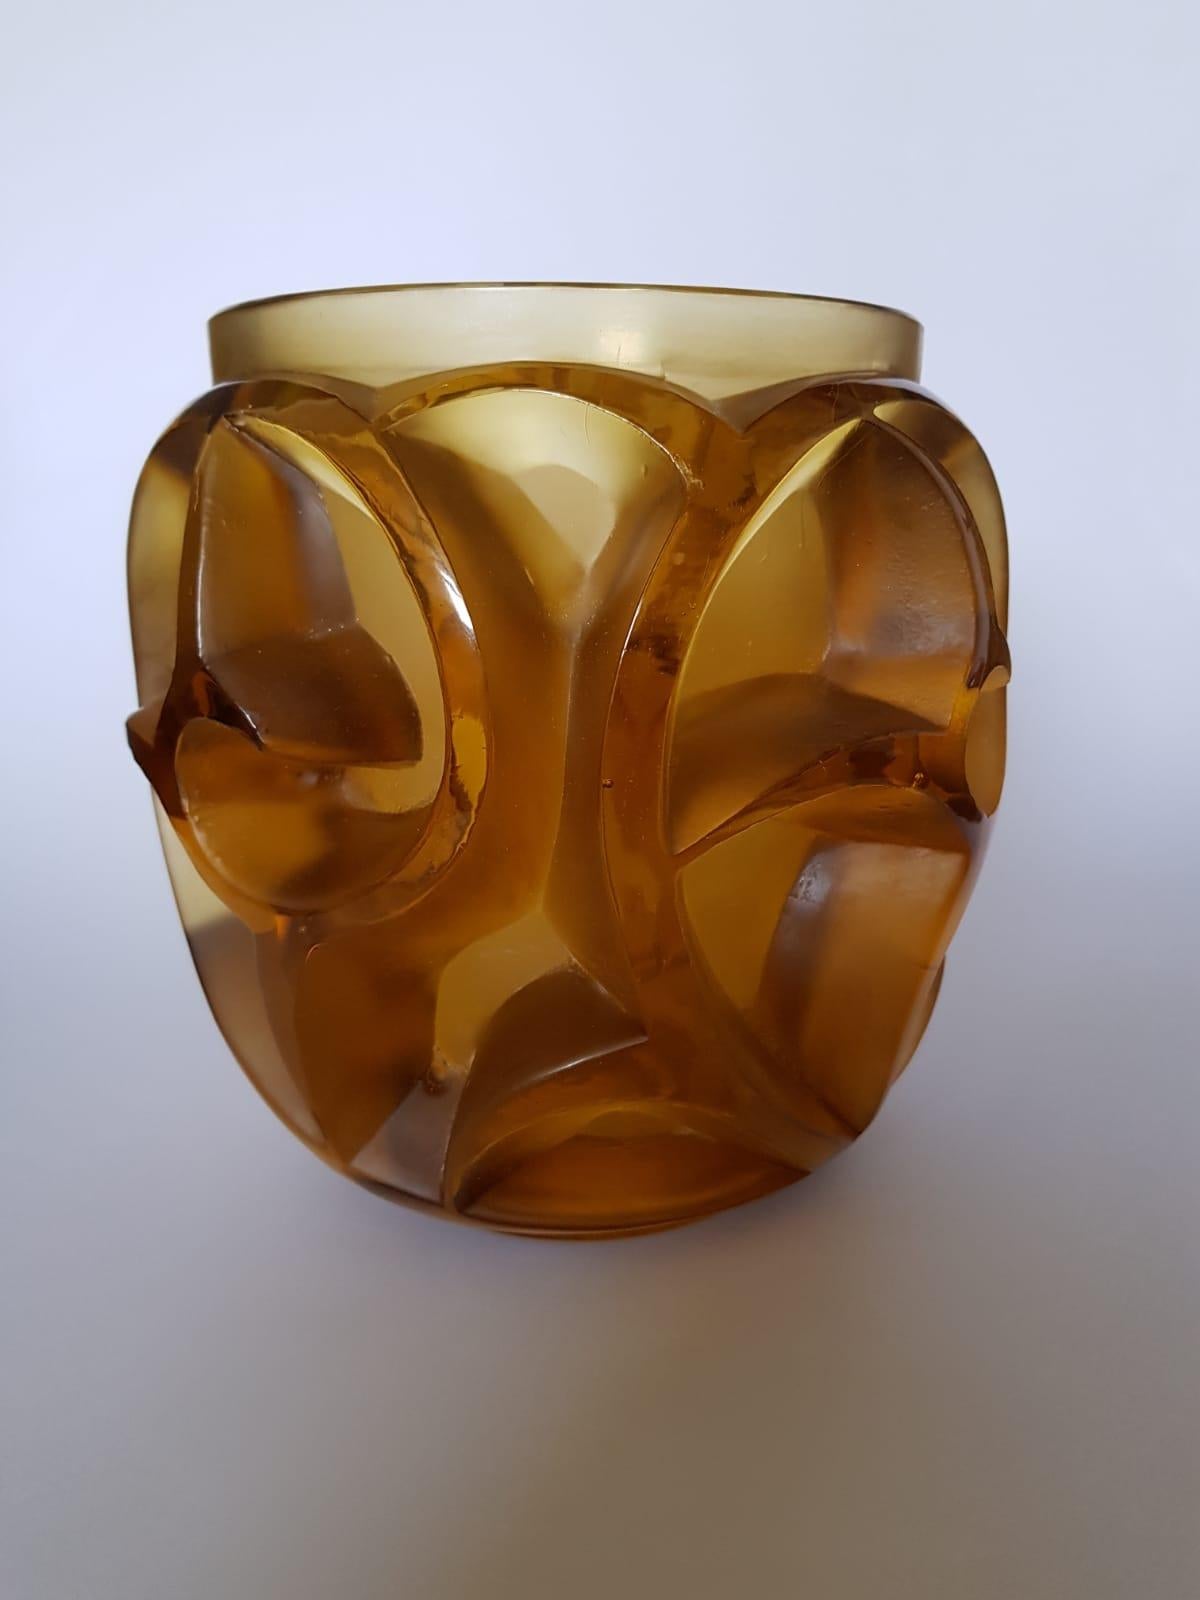 French 1926 Ren�é Lalique Tourbillons Vase in Yellow Glass, Suzanne Lalique Design